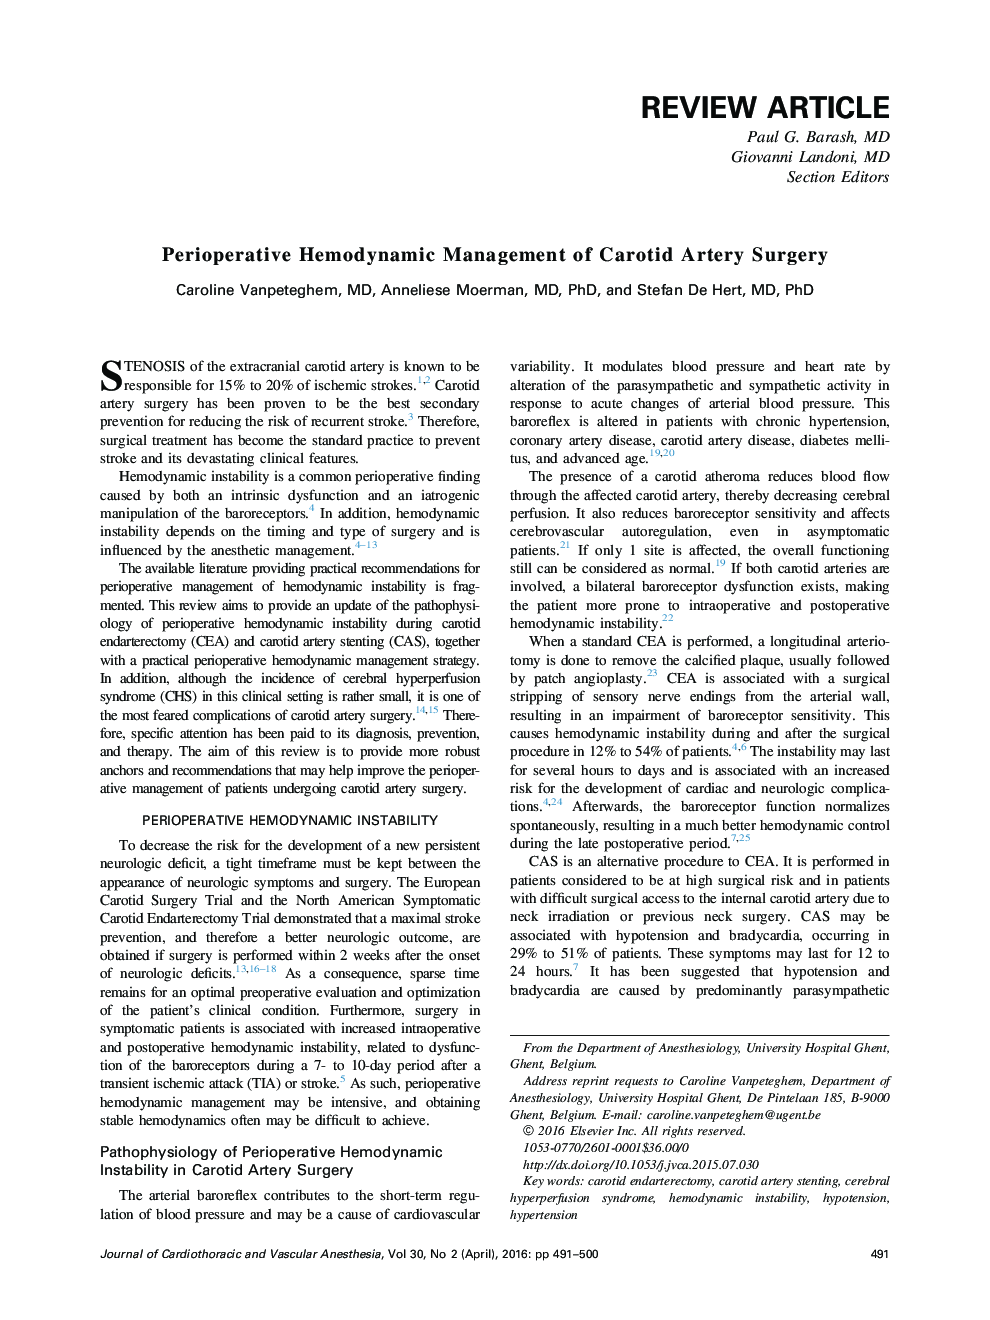 Perioperative Hemodynamic Management of Carotid Artery Surgery